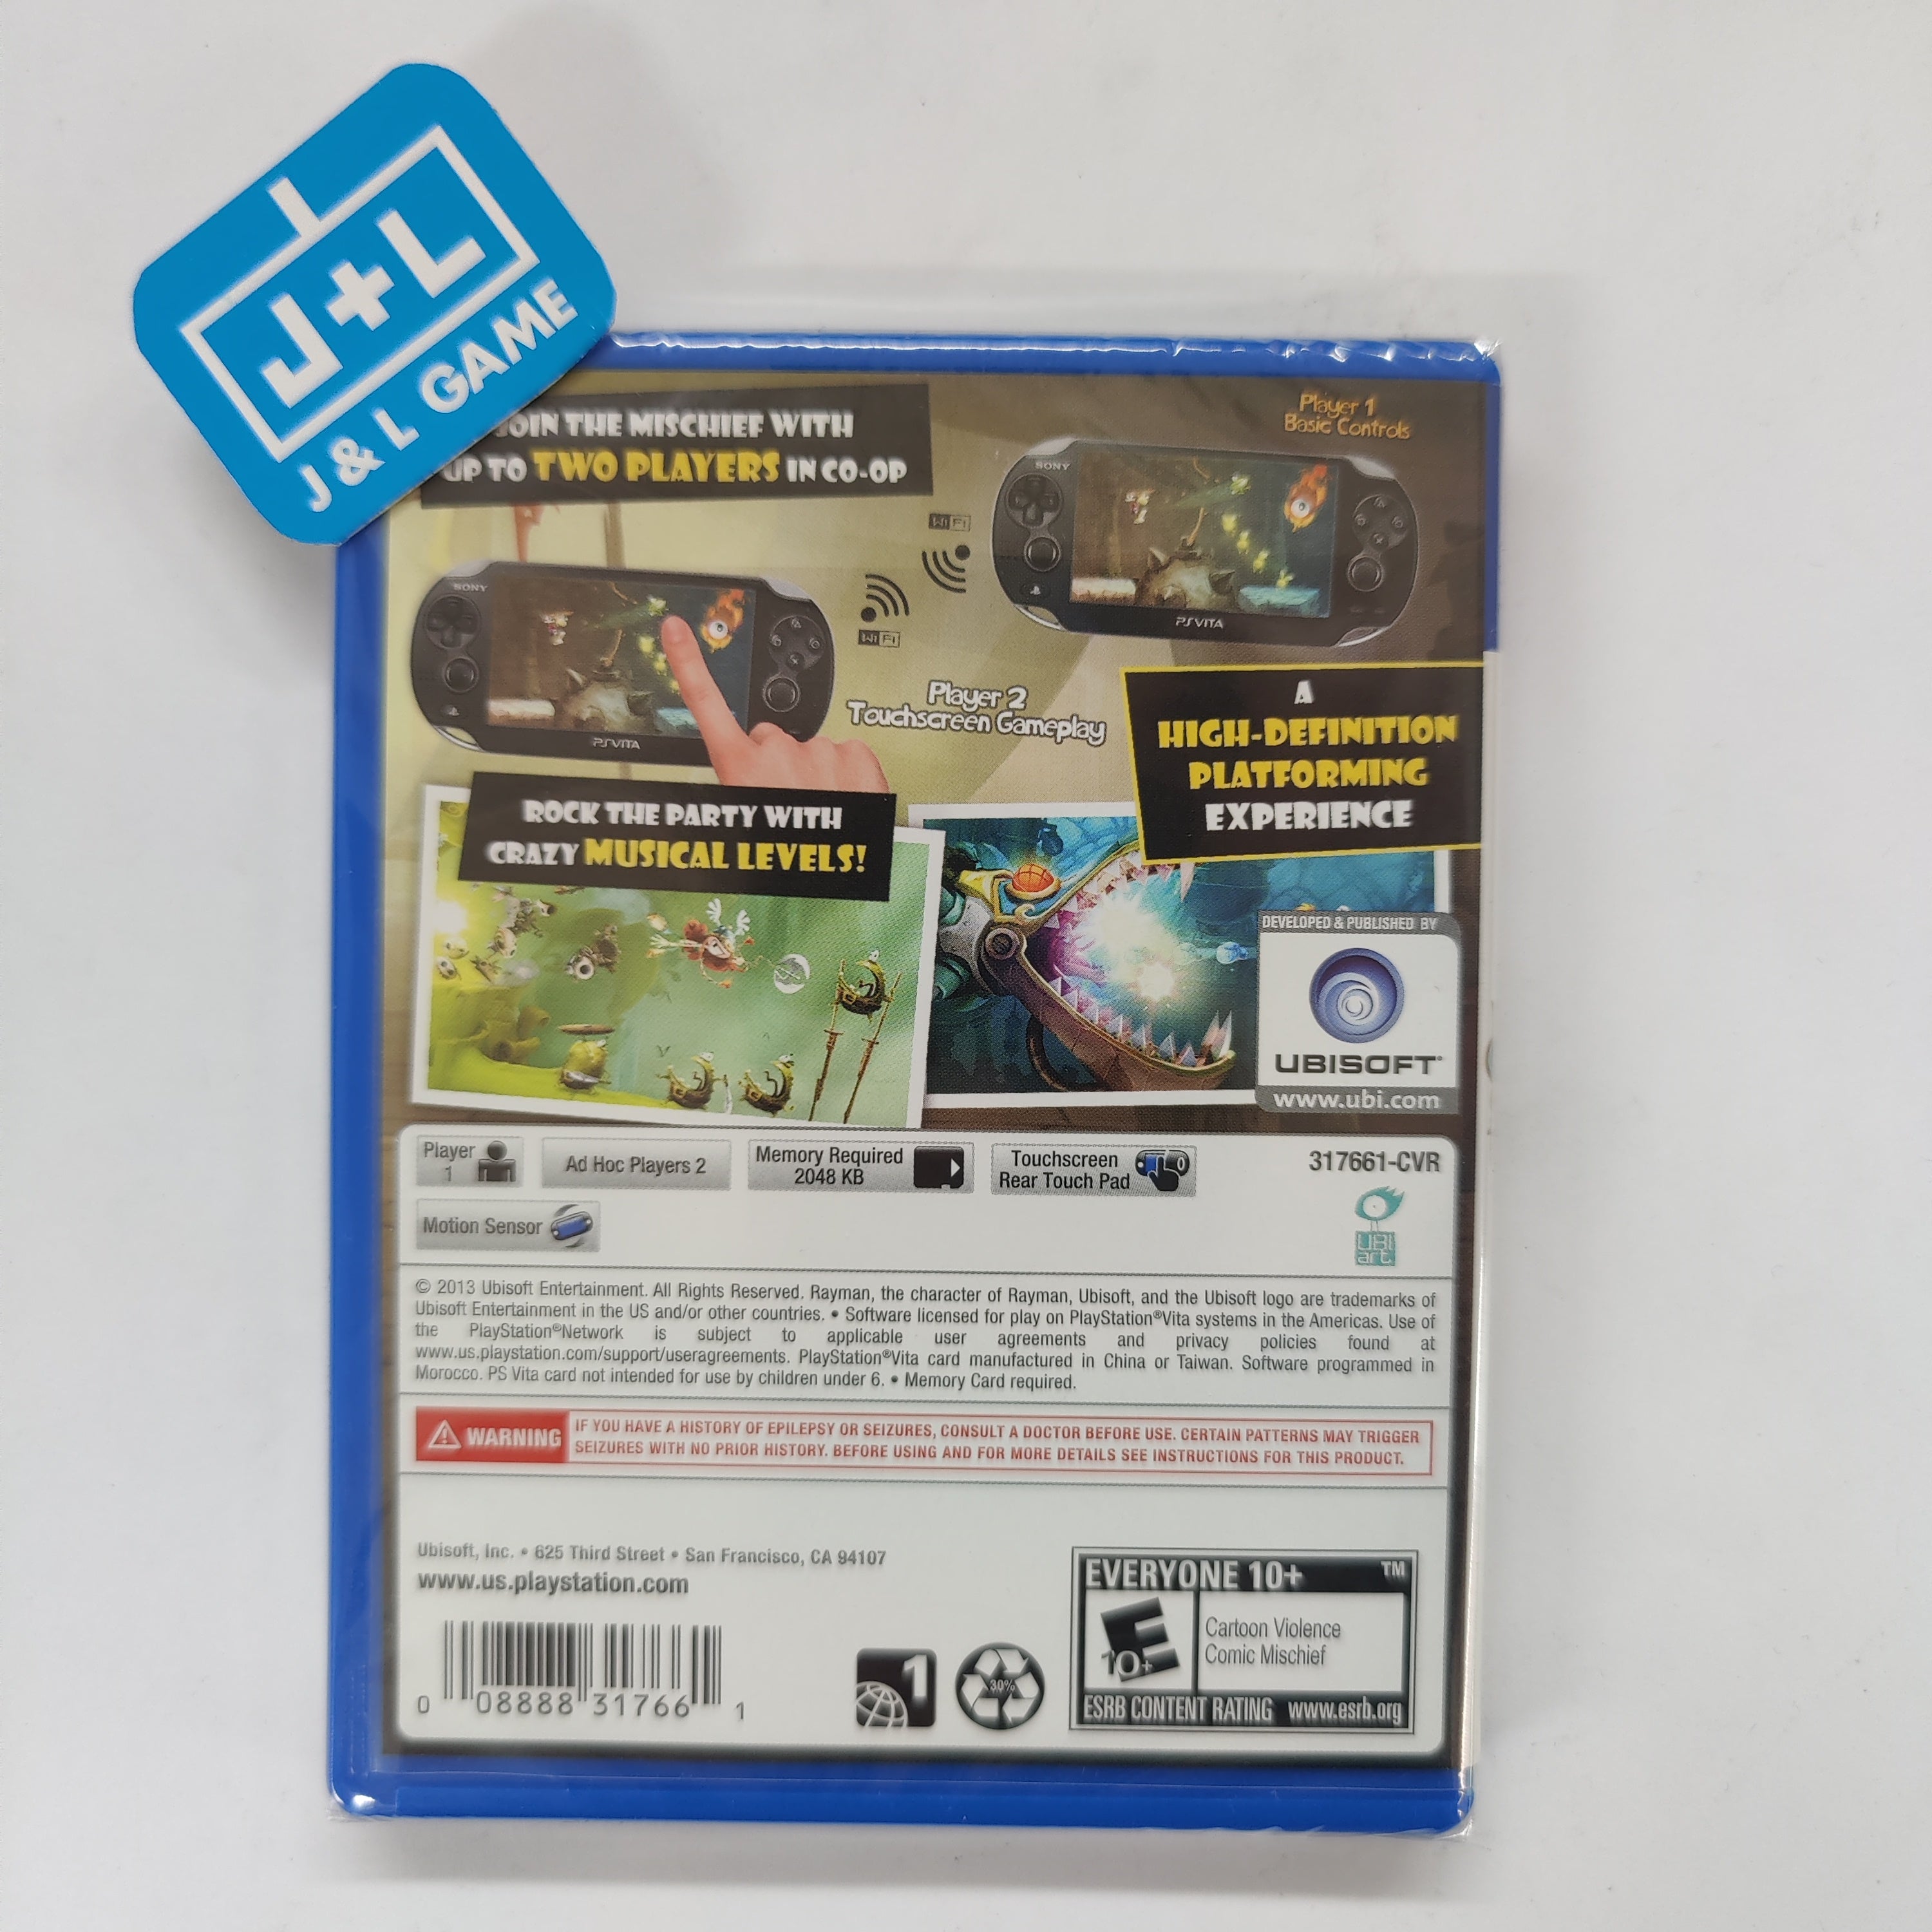 Rayman Legends - (PSV) PlayStation Vita Video Games Ubisoft   